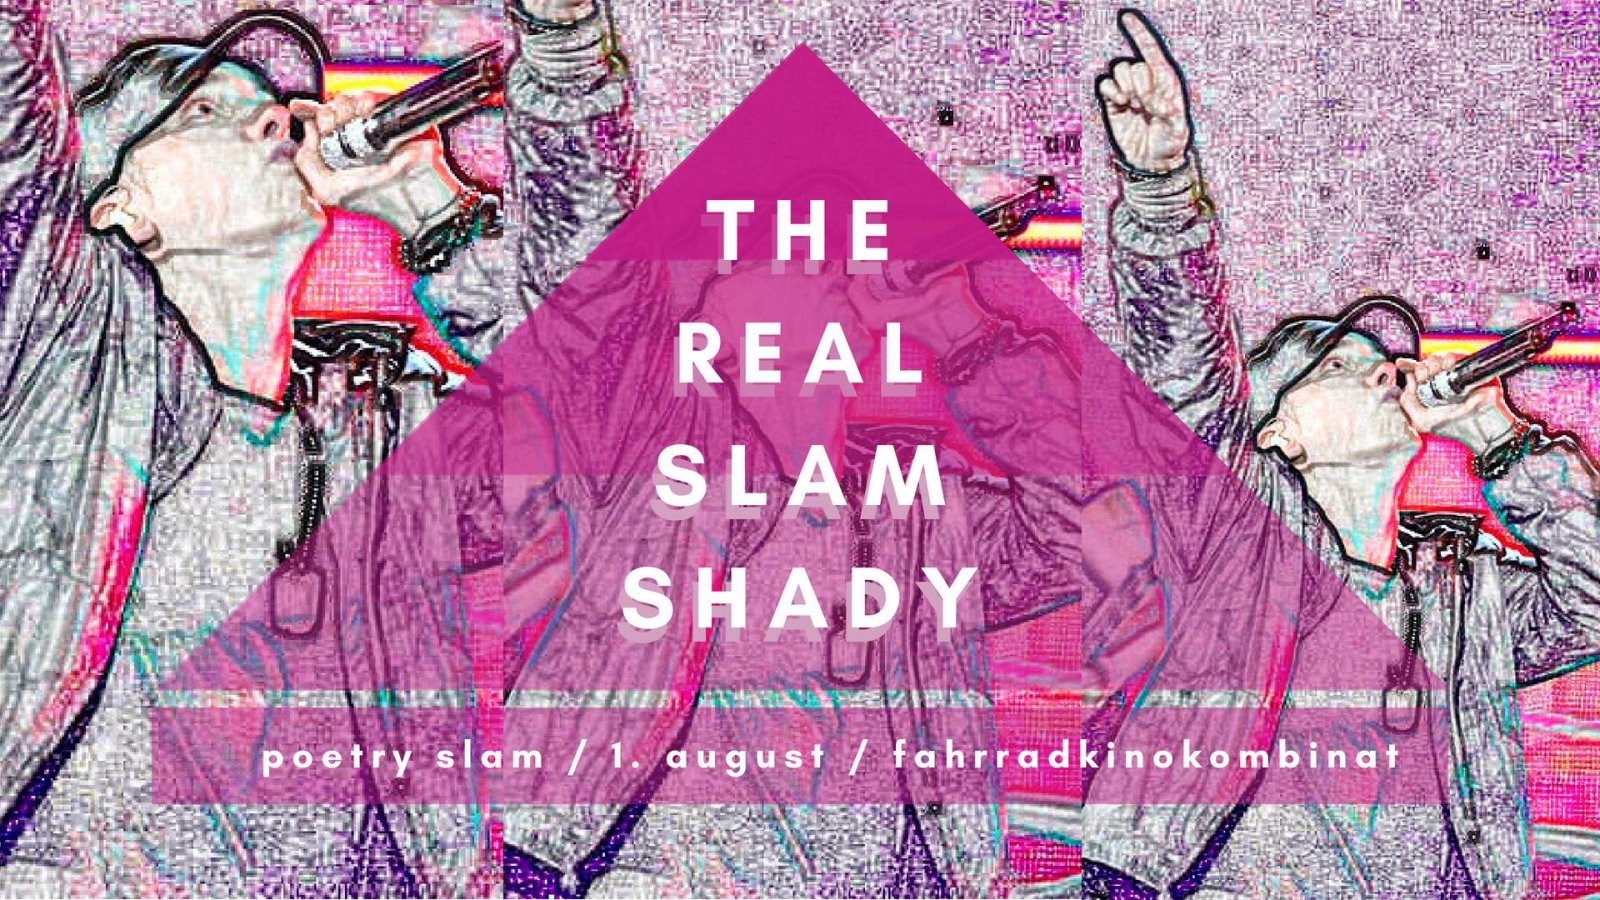 The Real Slam Shady / Poetry Slam